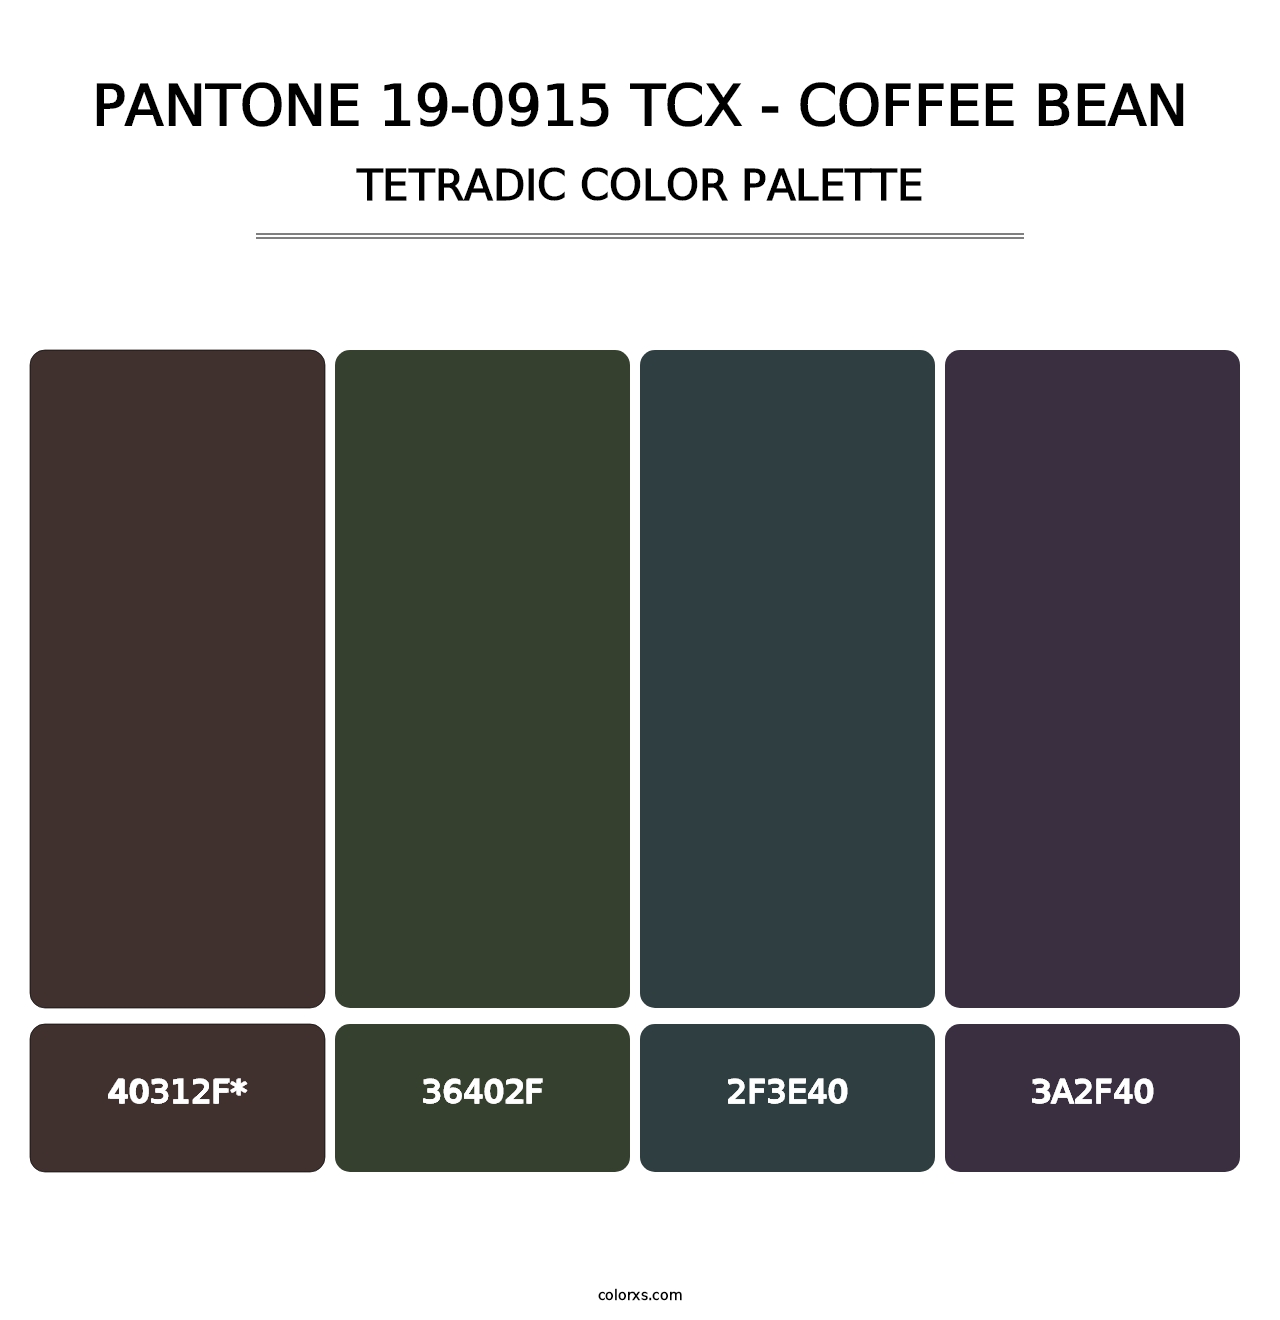 PANTONE 19-0915 TCX - Coffee Bean - Tetradic Color Palette